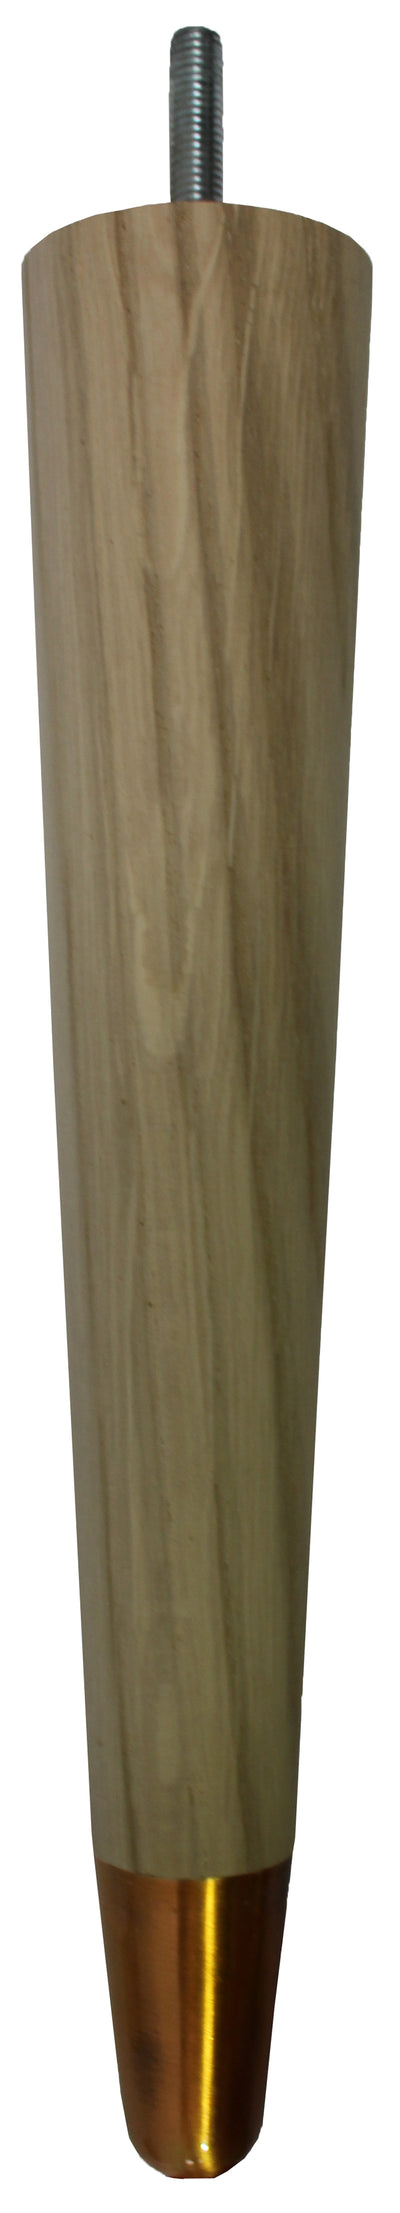 Liva Solid Oak Tapered Furniture Legs - Raw Finish - Oiled Bronze Slipper Cups - Set of 4